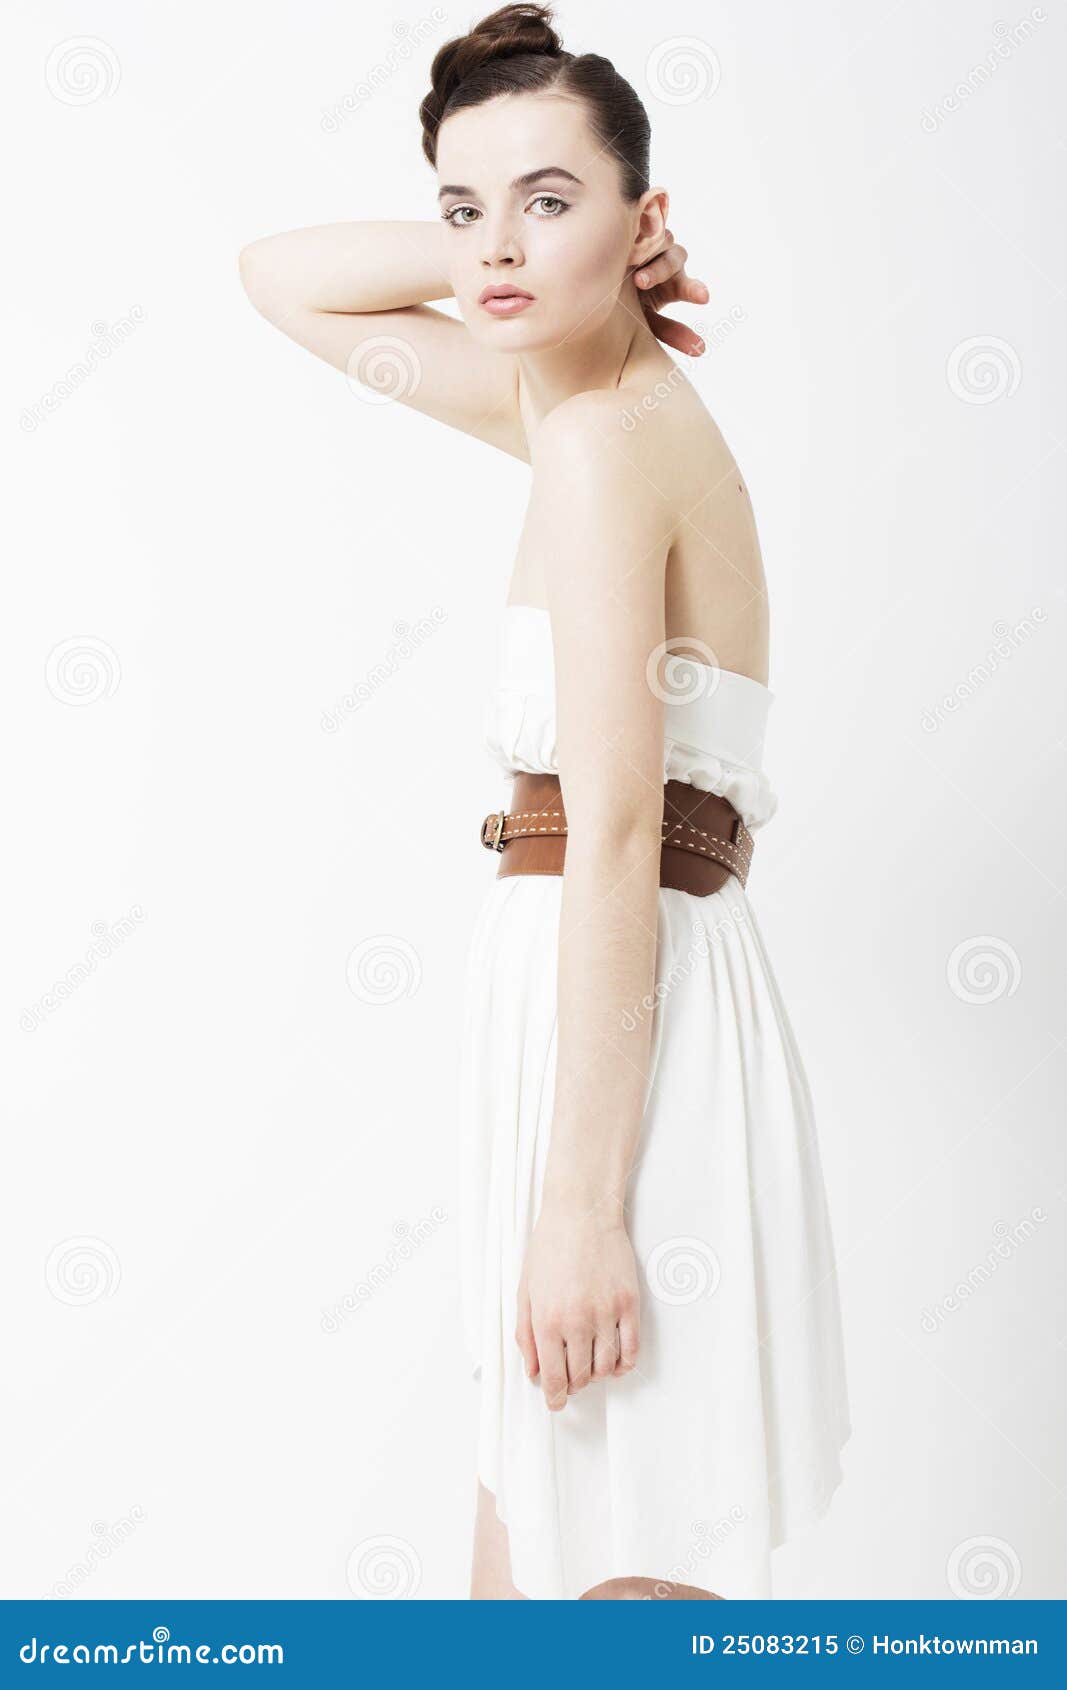 Fashion Woman in Elegant White Dress Stock Image - Image of grey ...